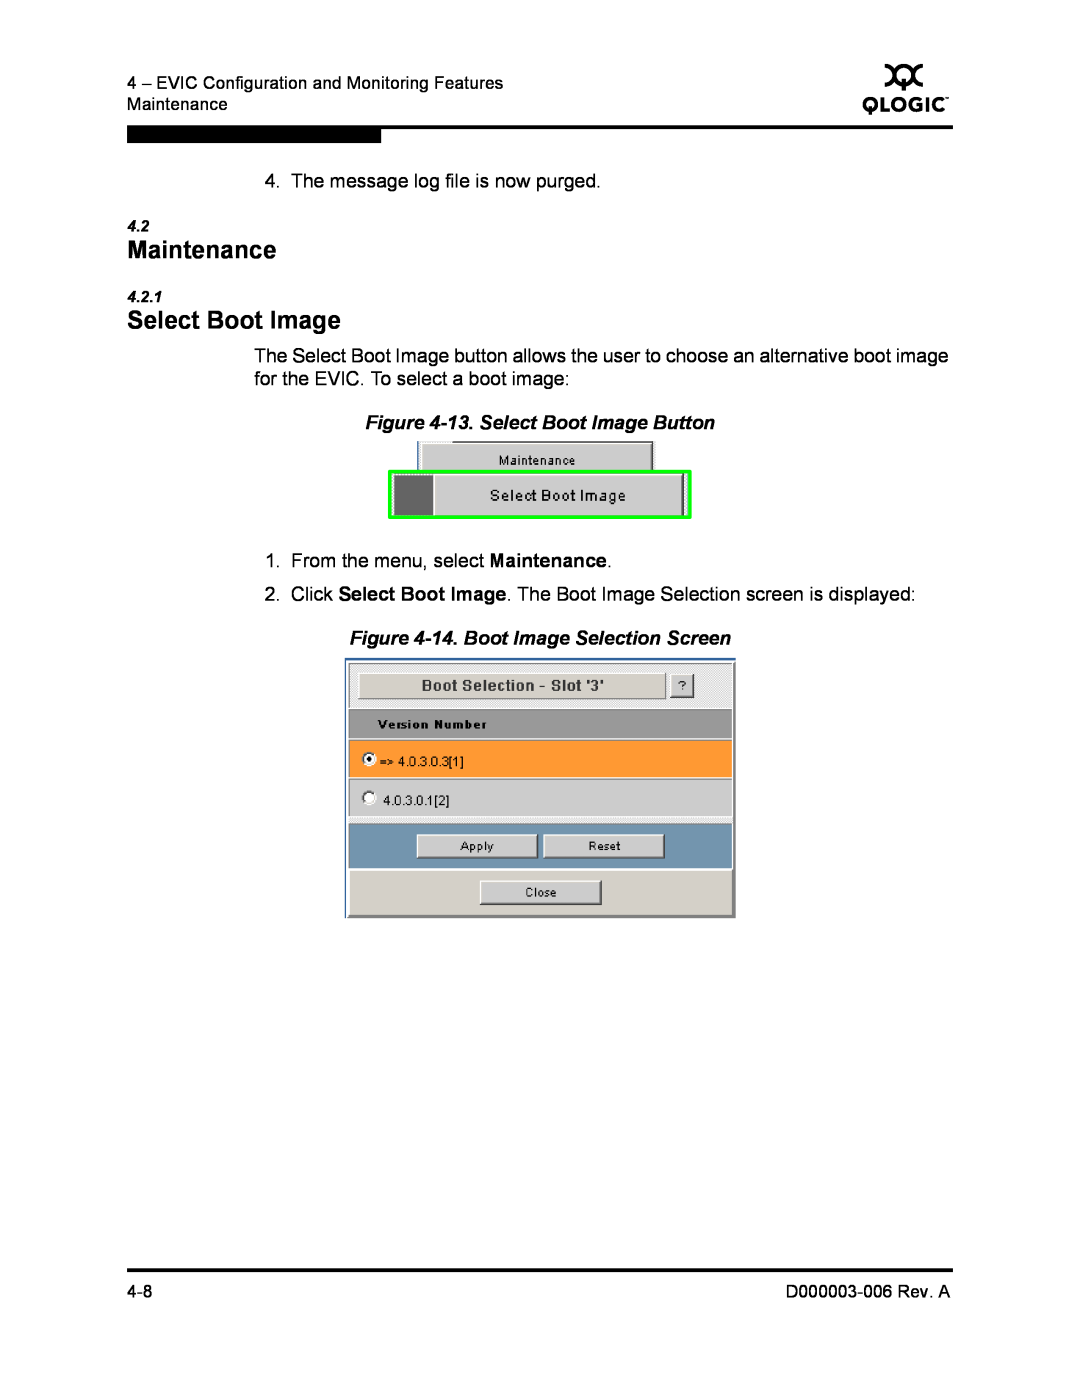 Q-Logic 9000 manual 13. Select Boot Image Button, 14. Boot Image Selection Screen, Maintenance 